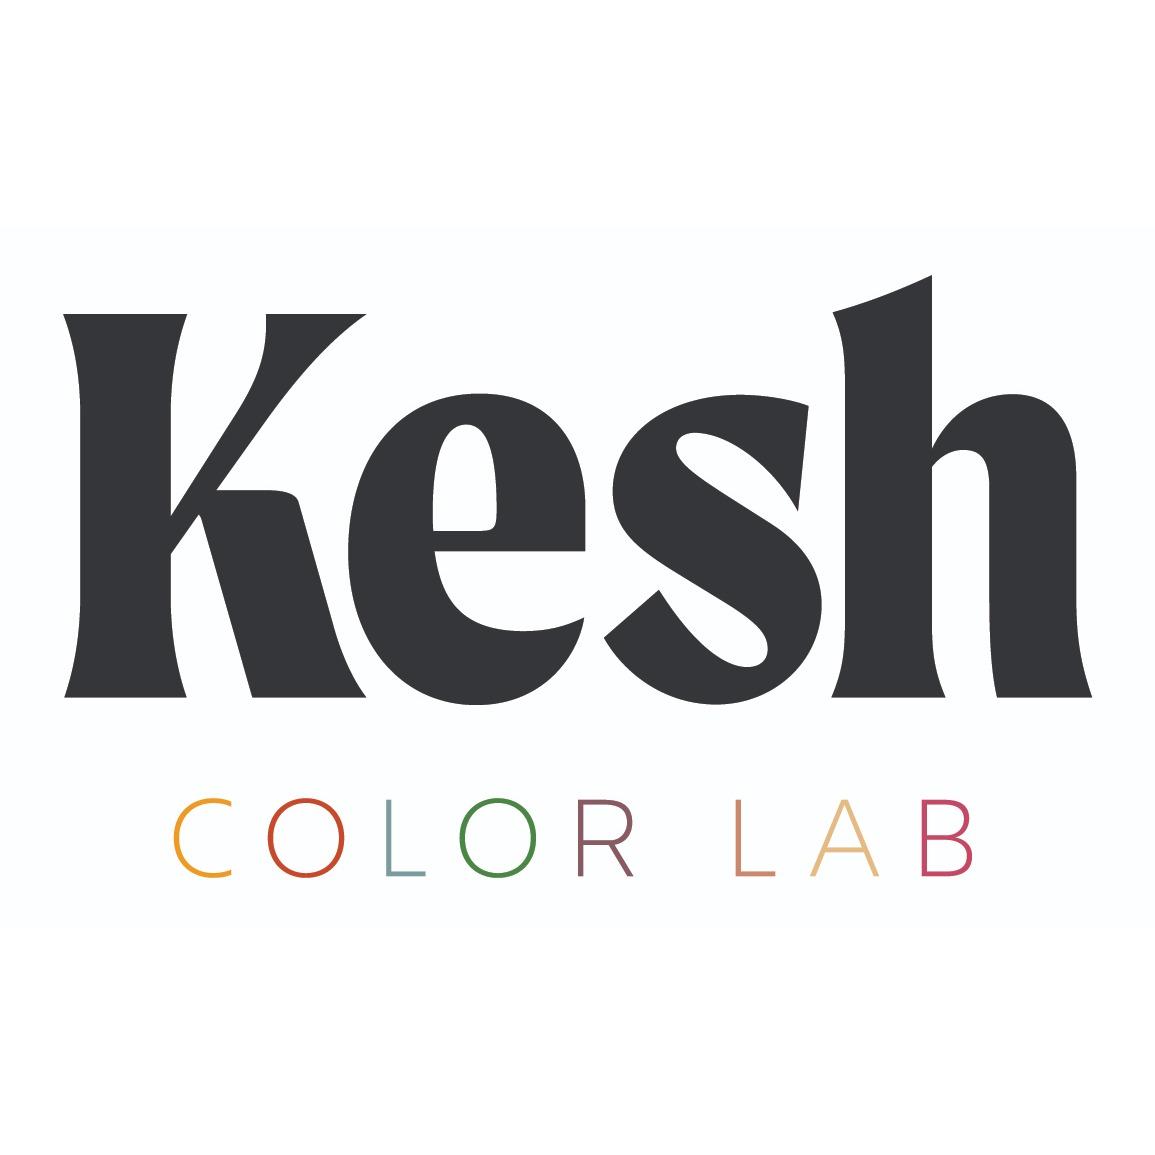 Салон красоты Color Lab. Юджин логотип. Colorlab. Lab Colour. Color darkroom